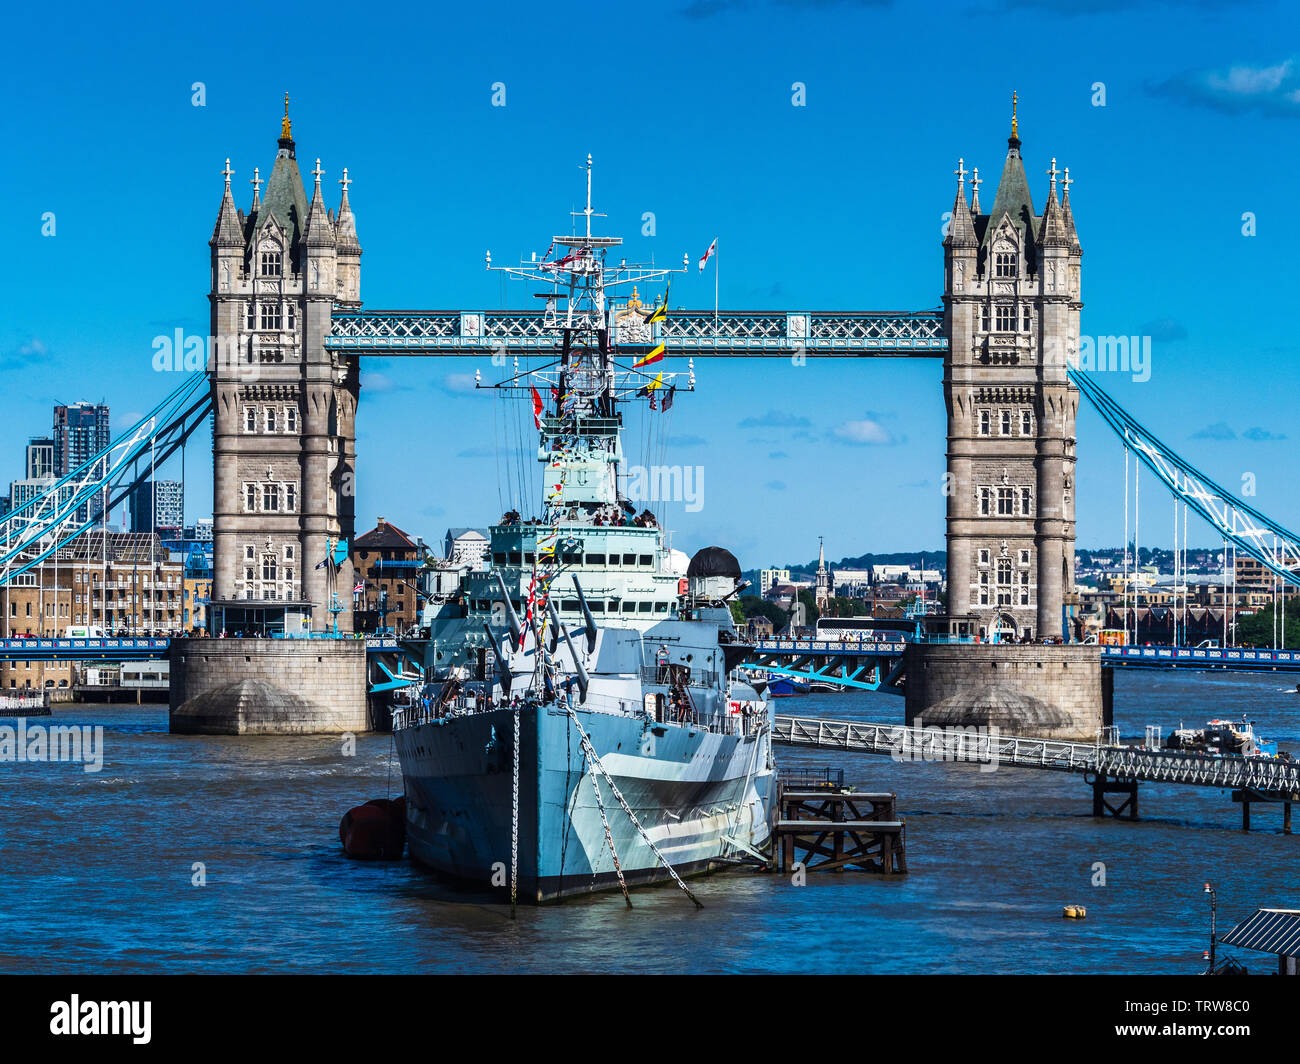 HMS Belfast in front of Tower Bridge - London Tourism Stock Photo